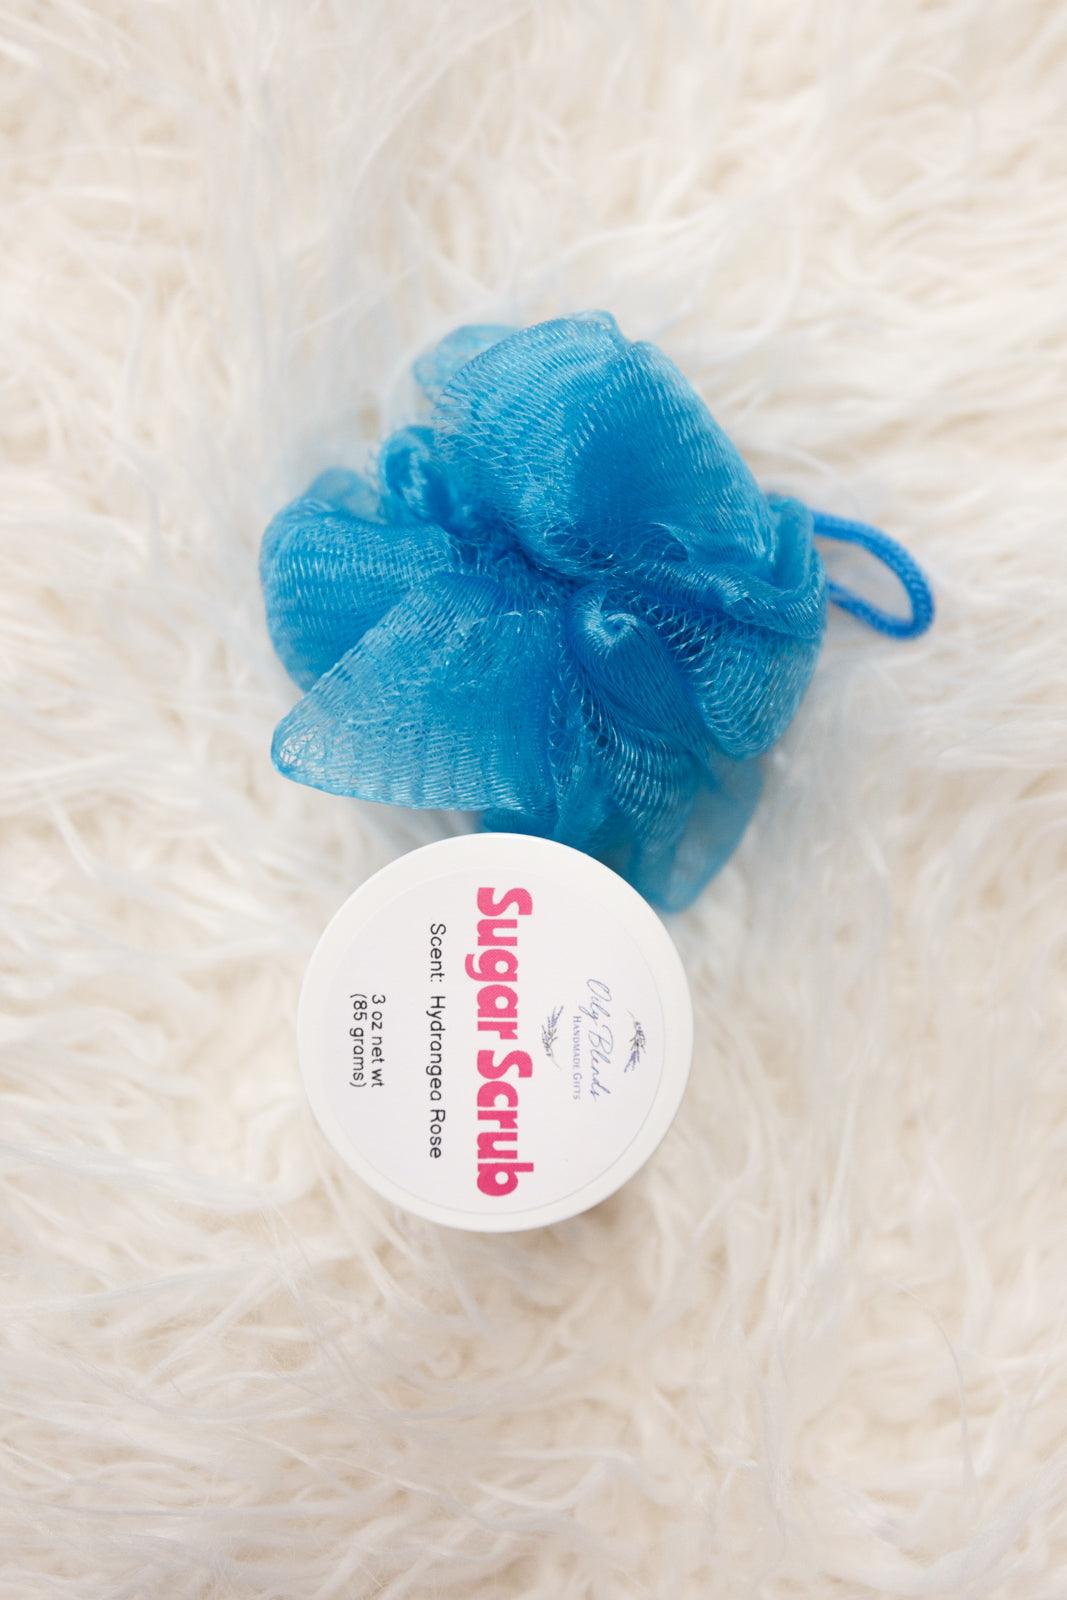 Sugar Scrub Gift Set in Hydrangea Rose-Self Care-Hope Boutique &amp; Apparel